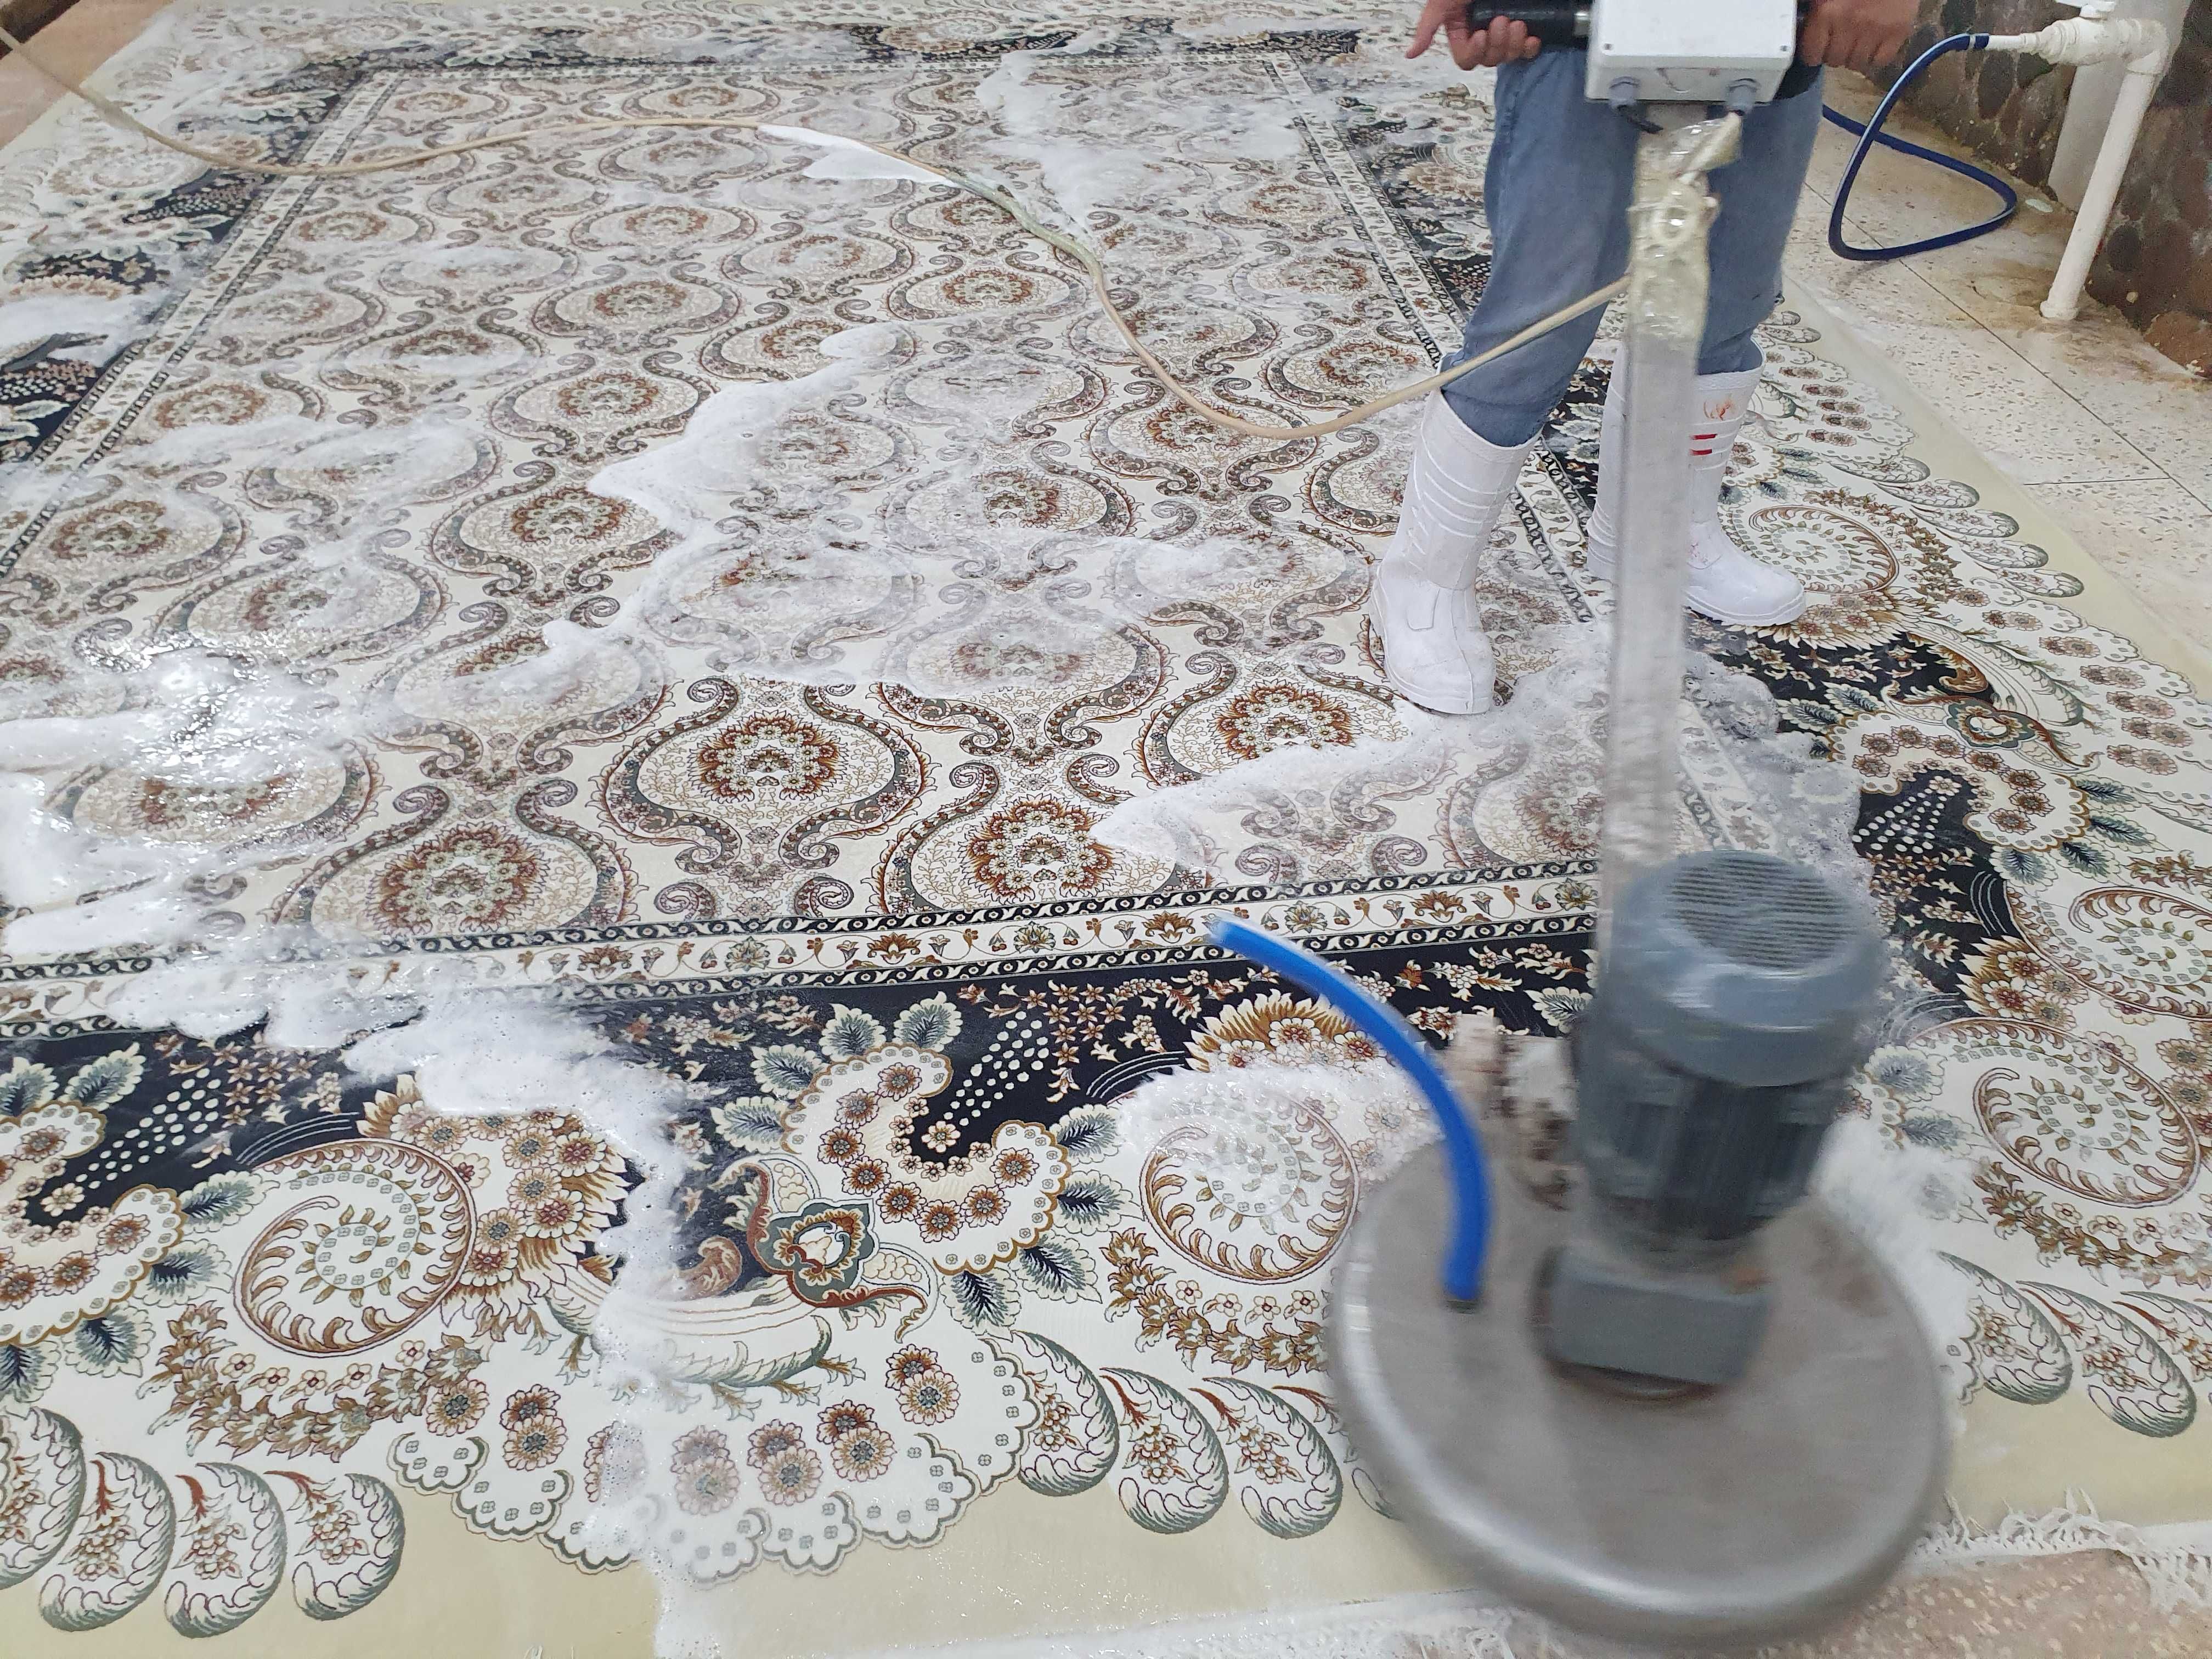 14 000сум/кв. Фабрика стирки ковров "Pokiza.uz" в Ташкенте. Гилам ювиш